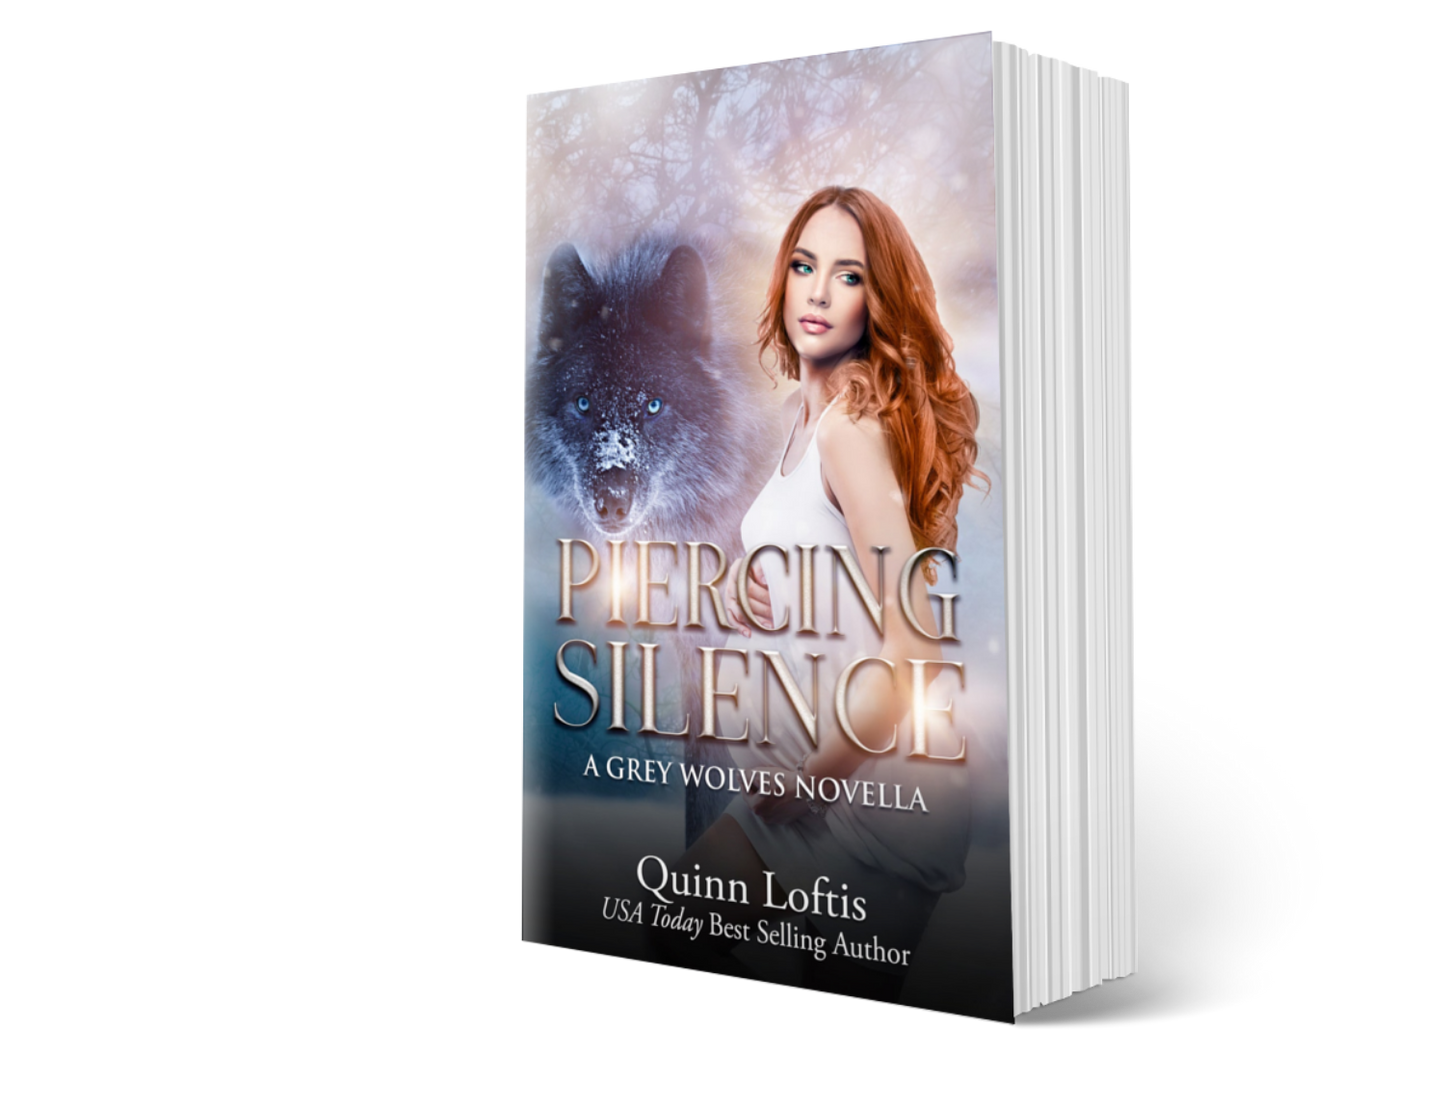 Piercing Silence (A Grey Wolves Novella)